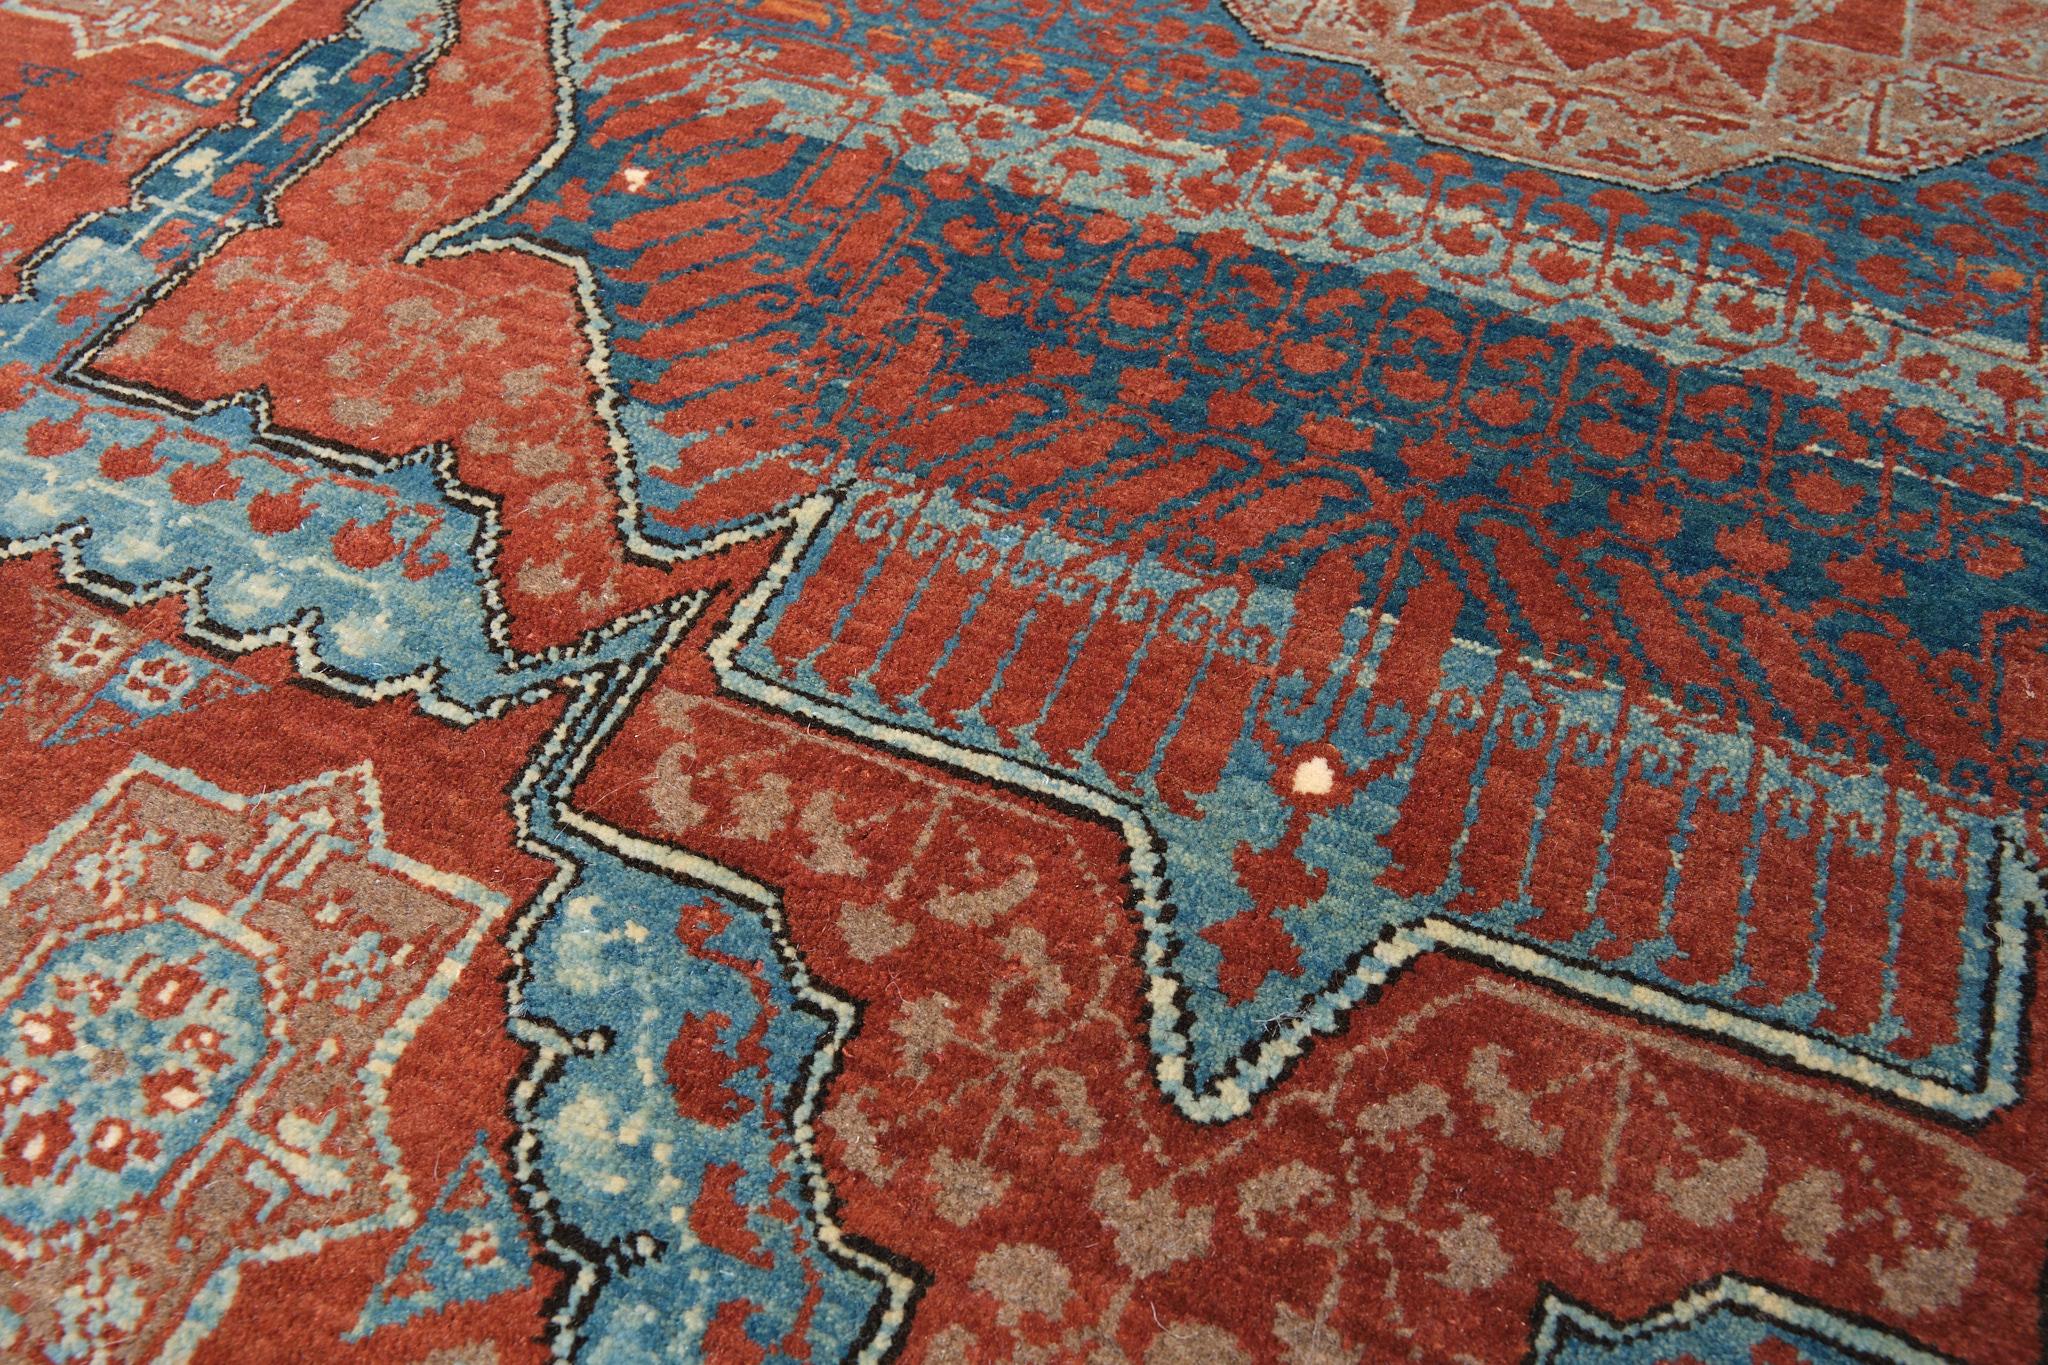 Turkish Ararat Rugs the Simonetti Mamluk Carpet 16th Century Revival Rug, Natural Dyed For Sale